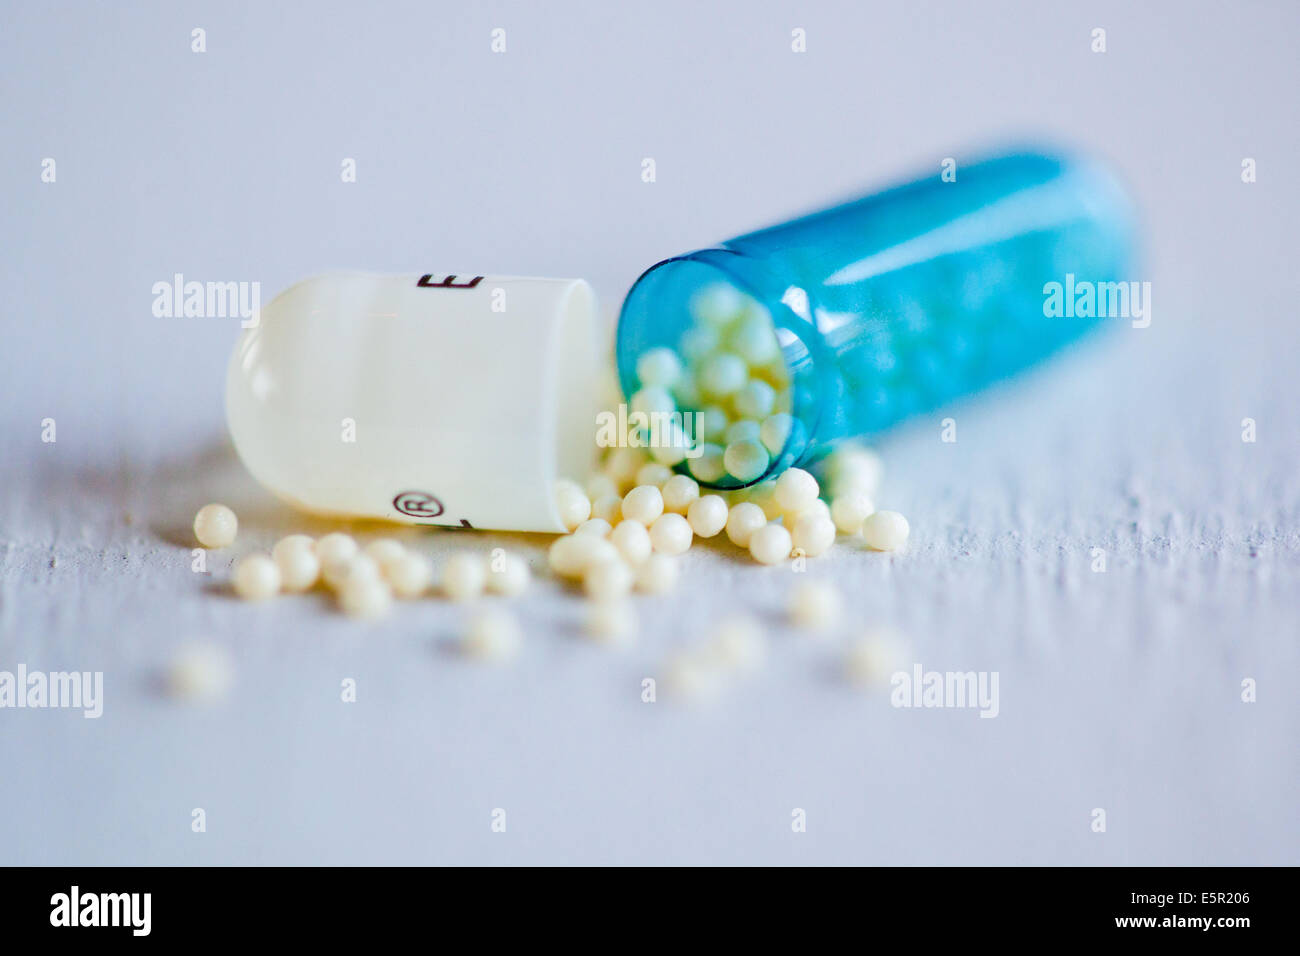 Opened drug capsule. Stock Photo